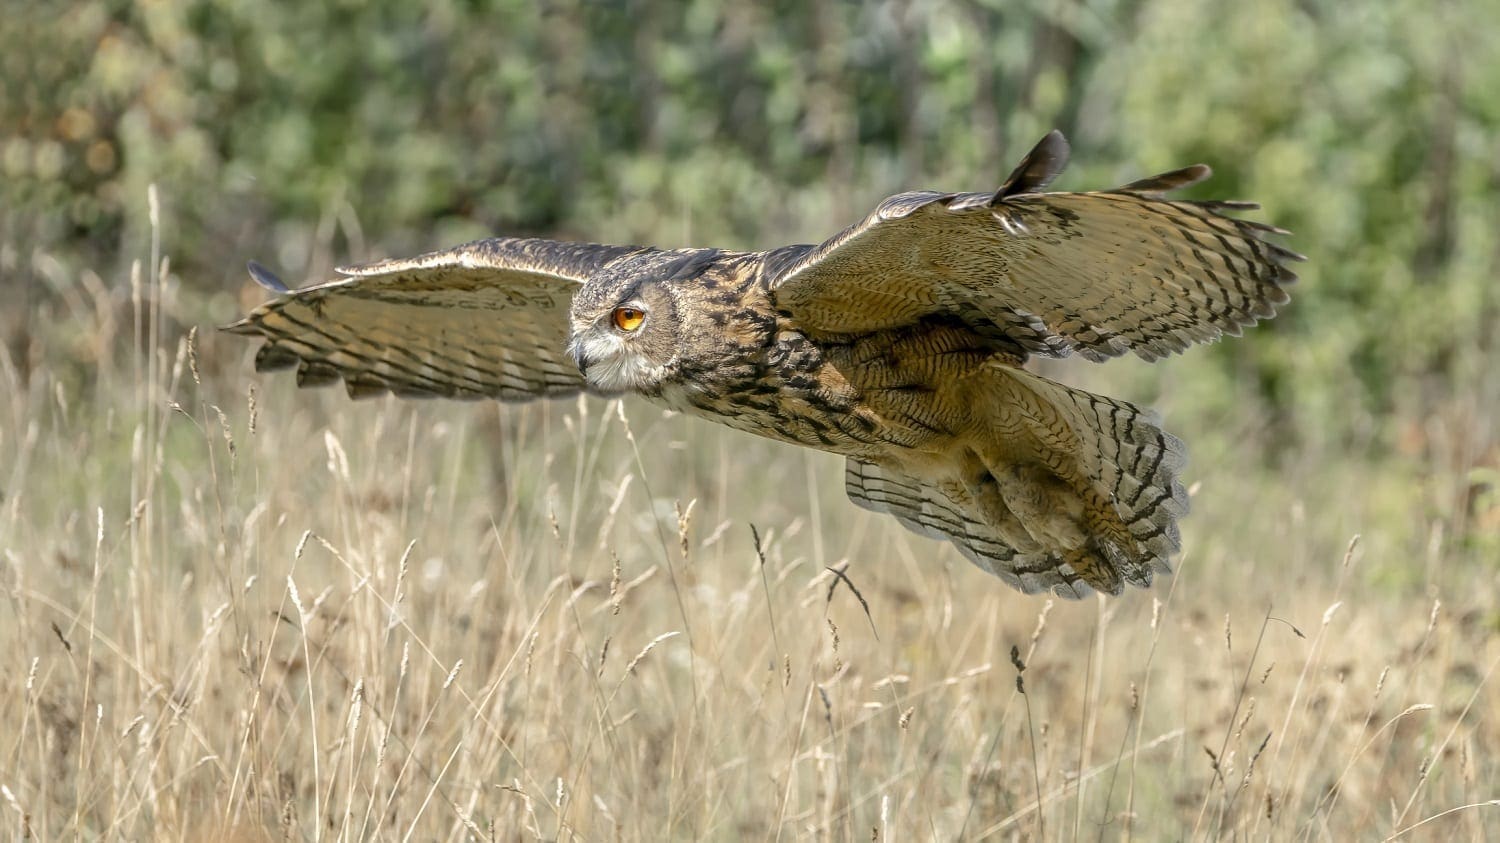 Eurasian Eagle Owl flying over grasses: ID 158990579 © Agdbeukhof | Dreamstime.com